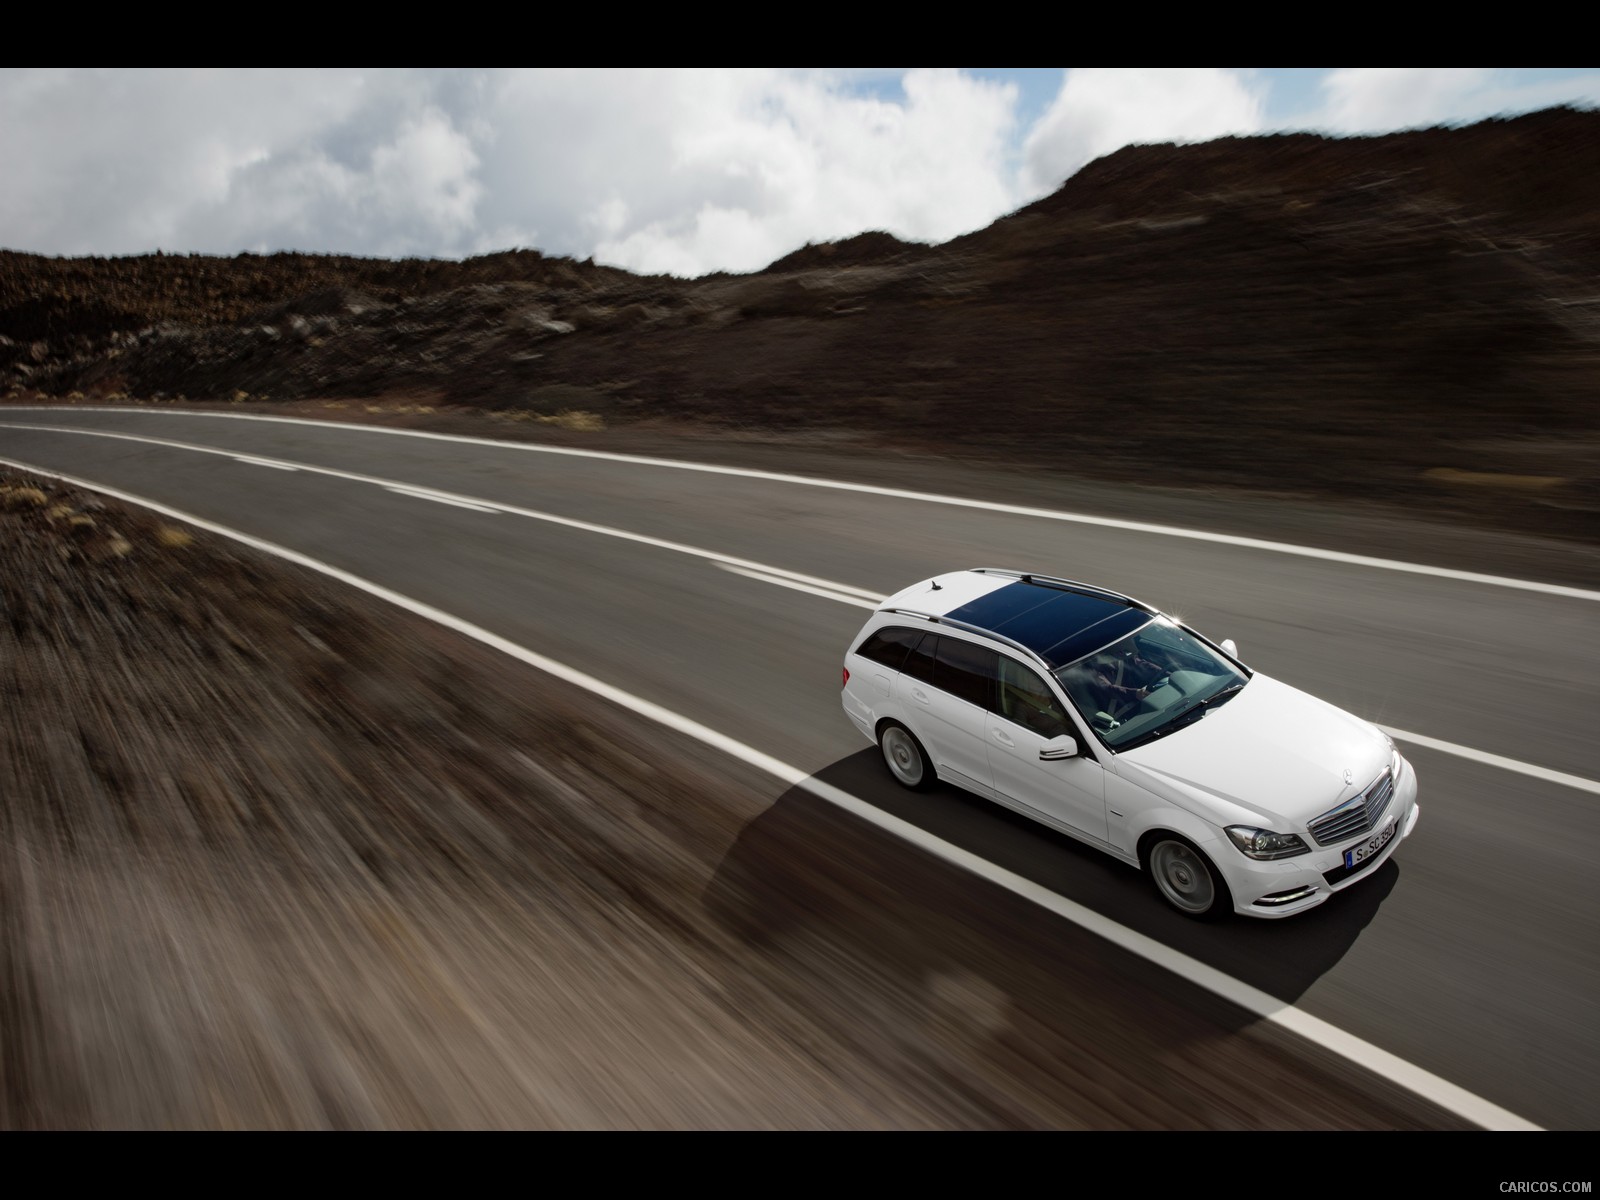 Mercedes-Benz C-Class Estate (2012)  - Top, #10 of 36